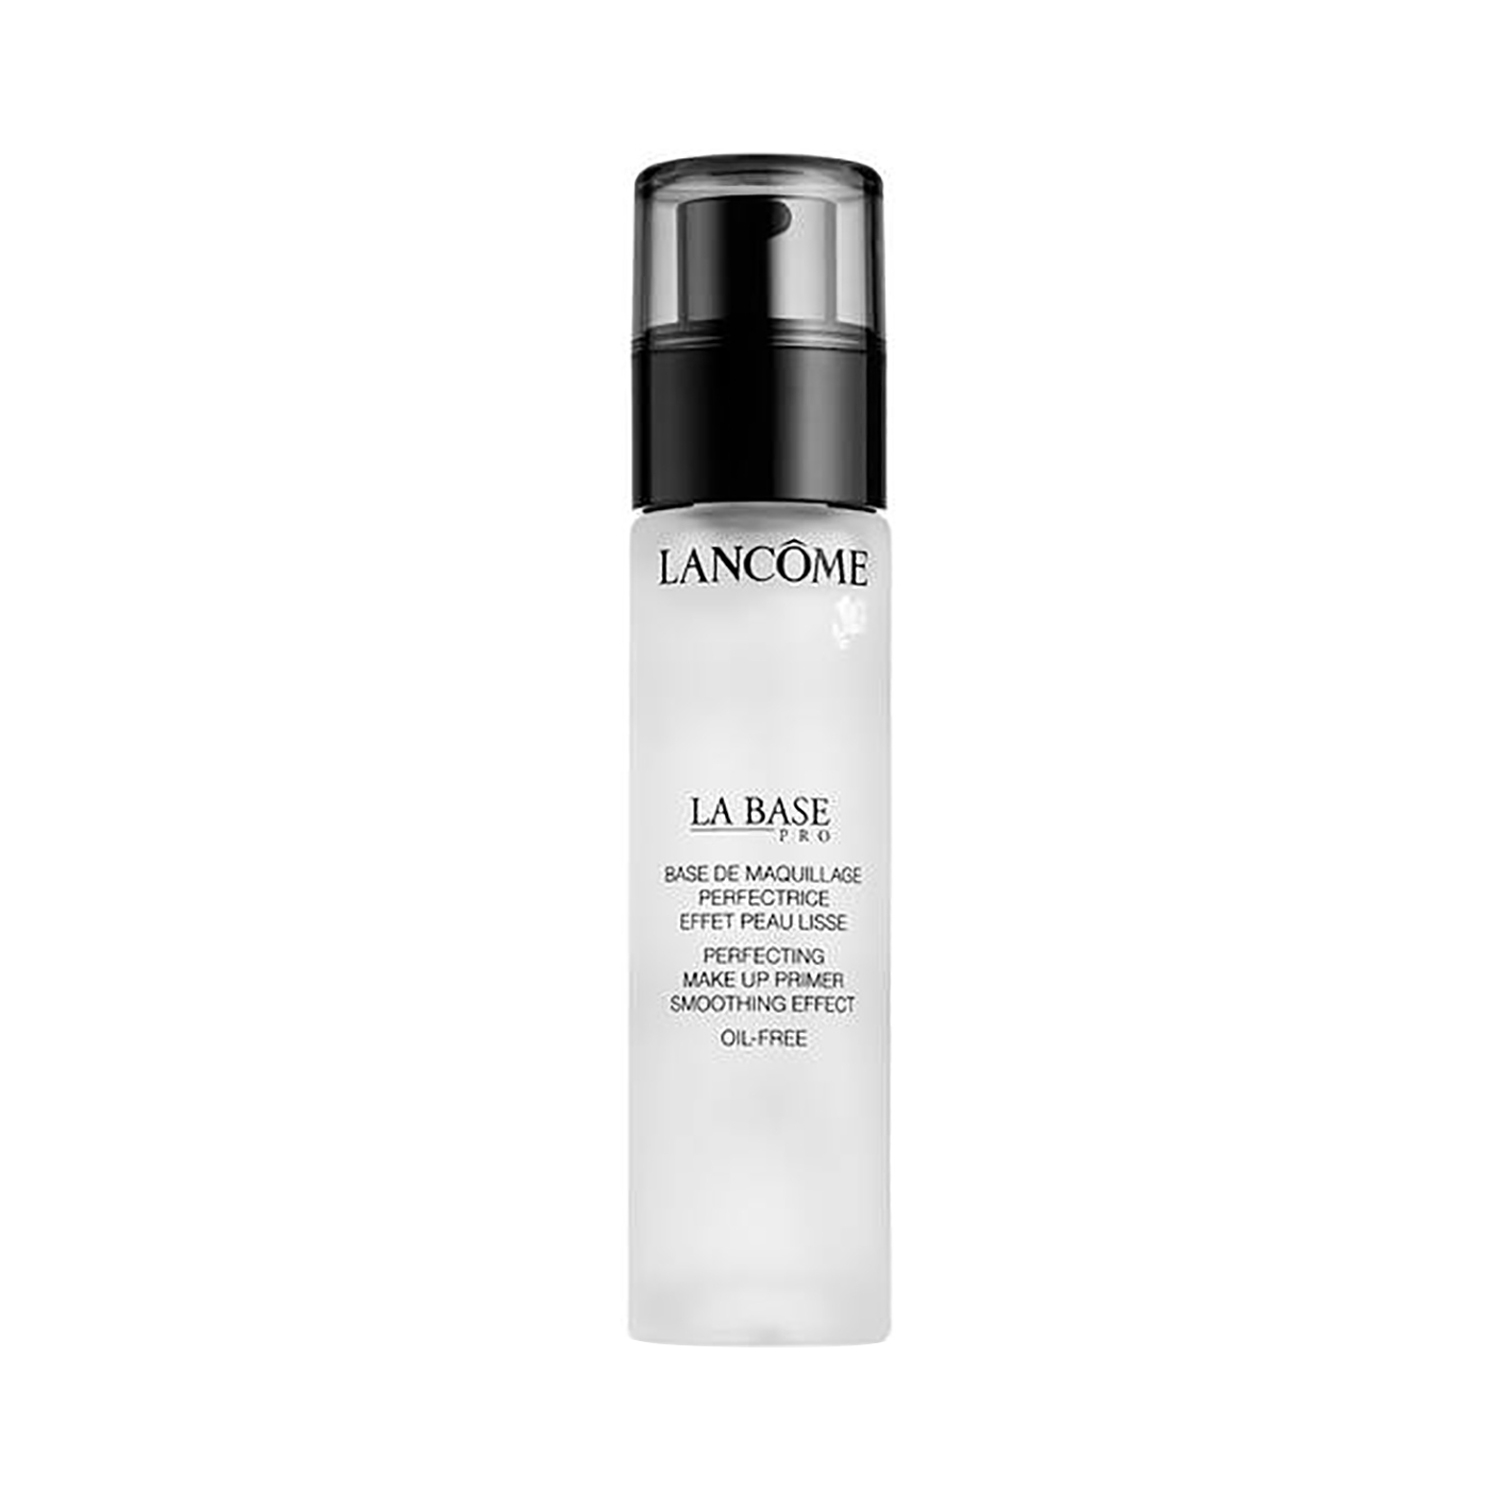 Lancome | Lancome La Base Pro Face Primer - Clear (25ml)